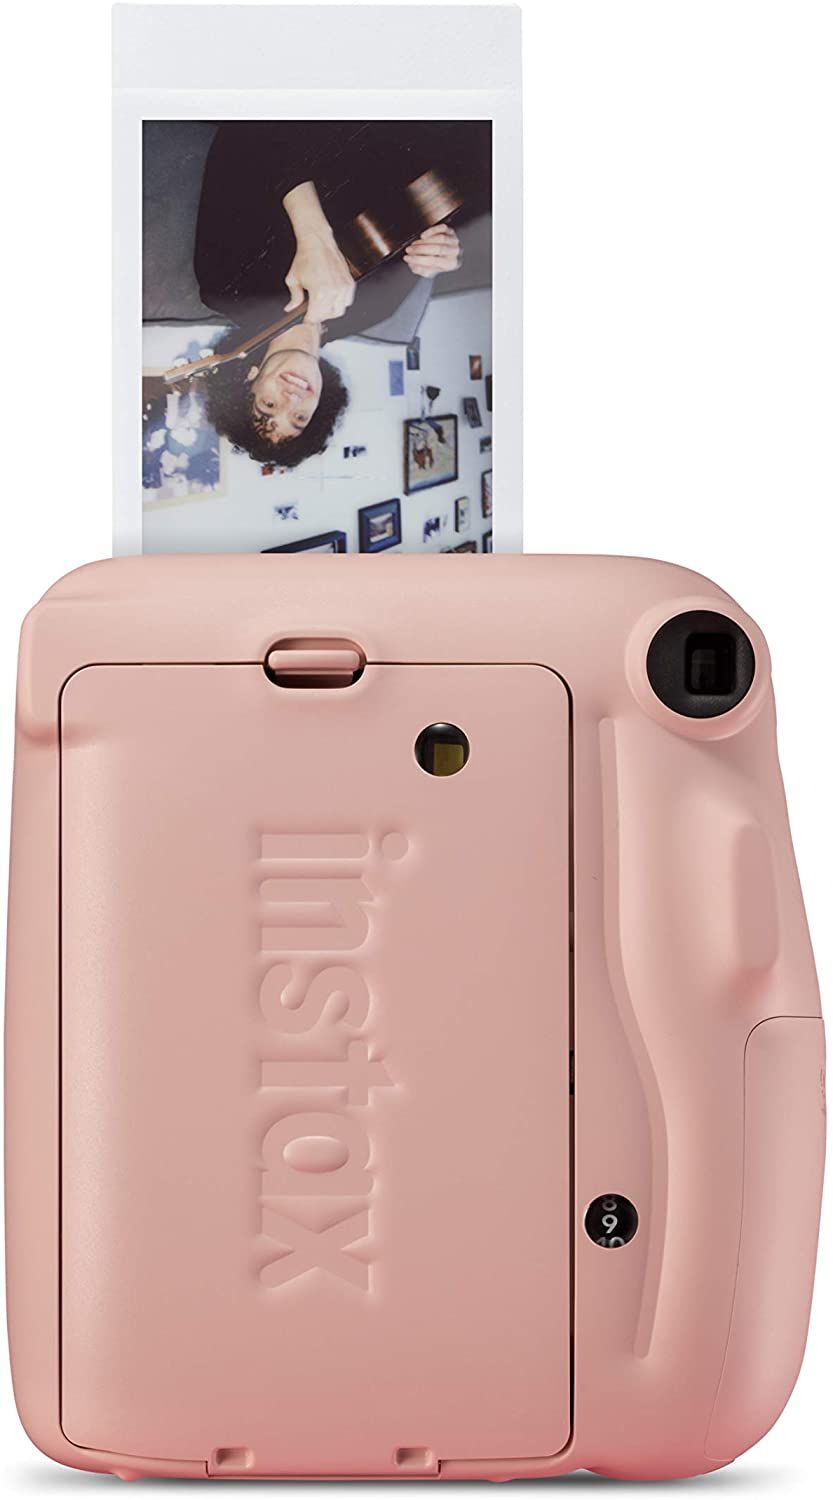 FUJ170142 - Cmara FUJIFILM Instax Mini 11 Blush Pink (FUJI70142)